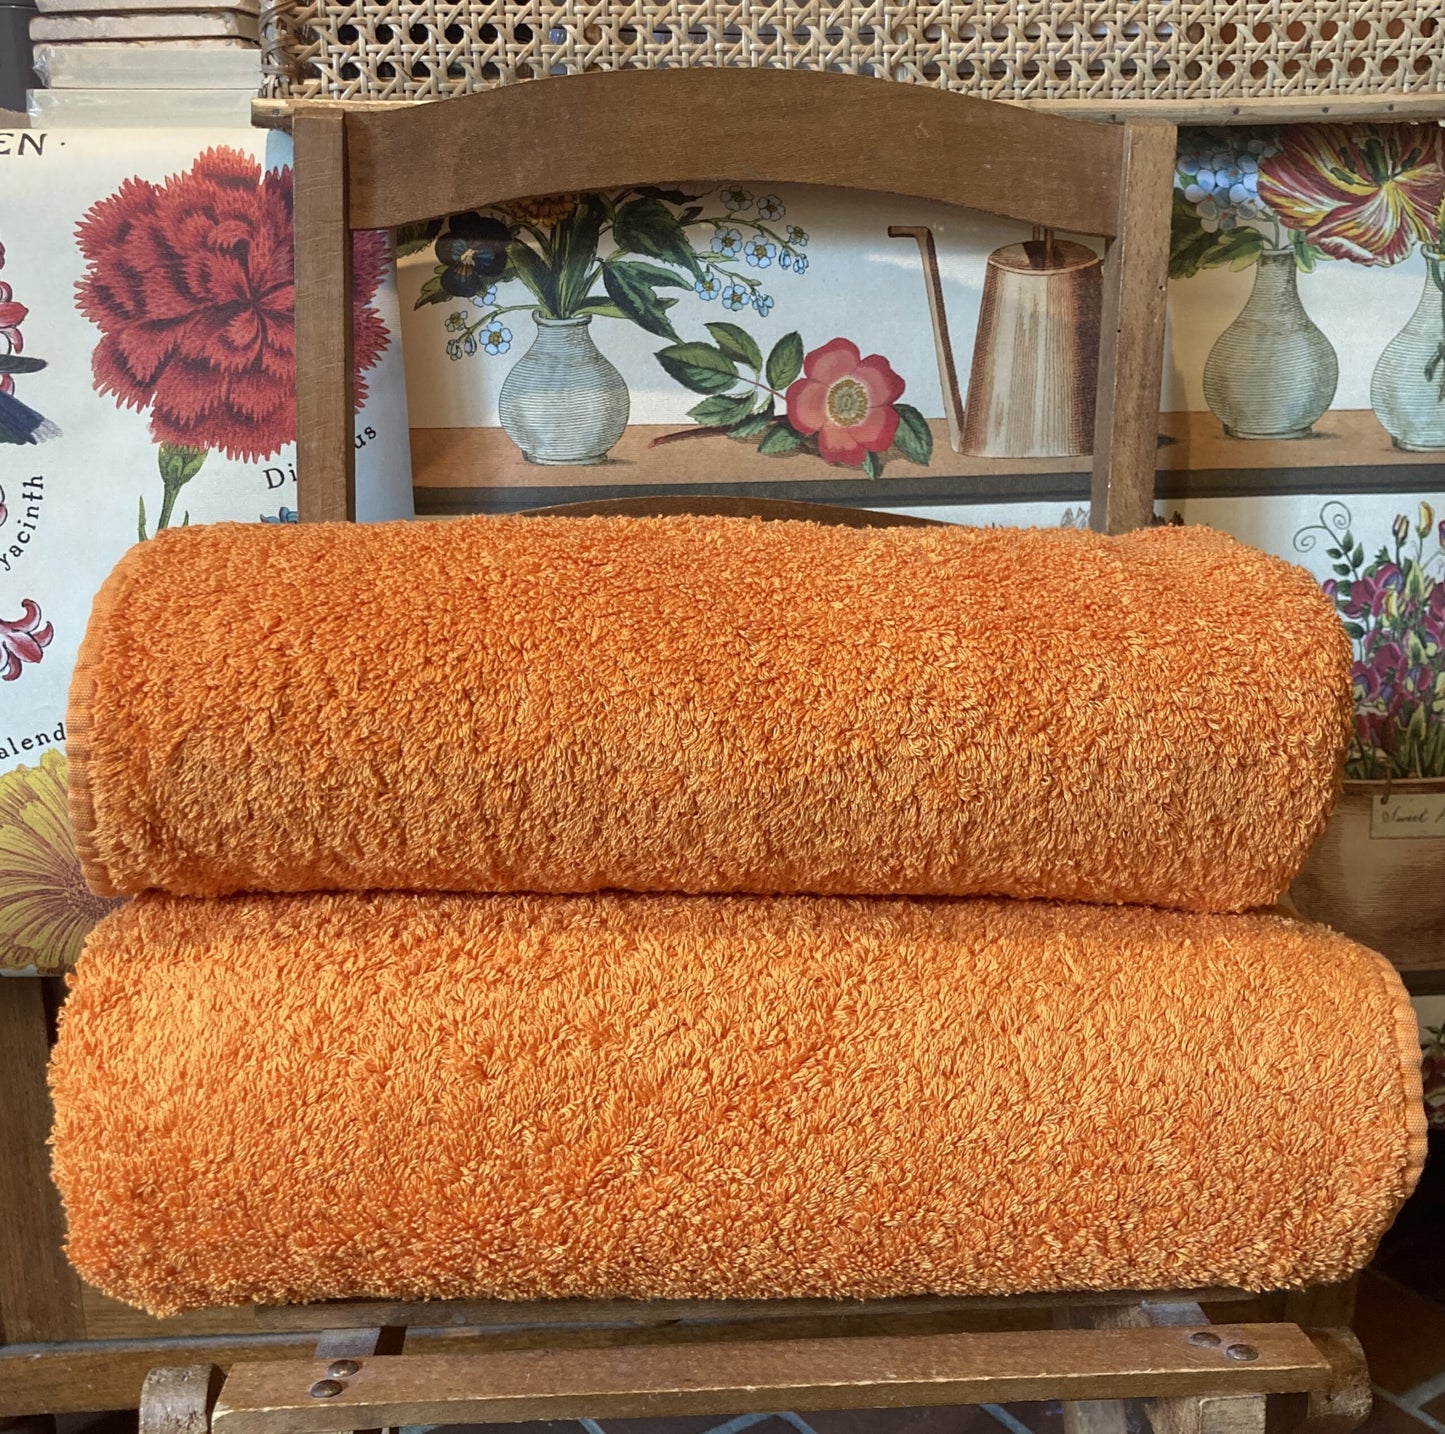 Tangerine Bath Towel